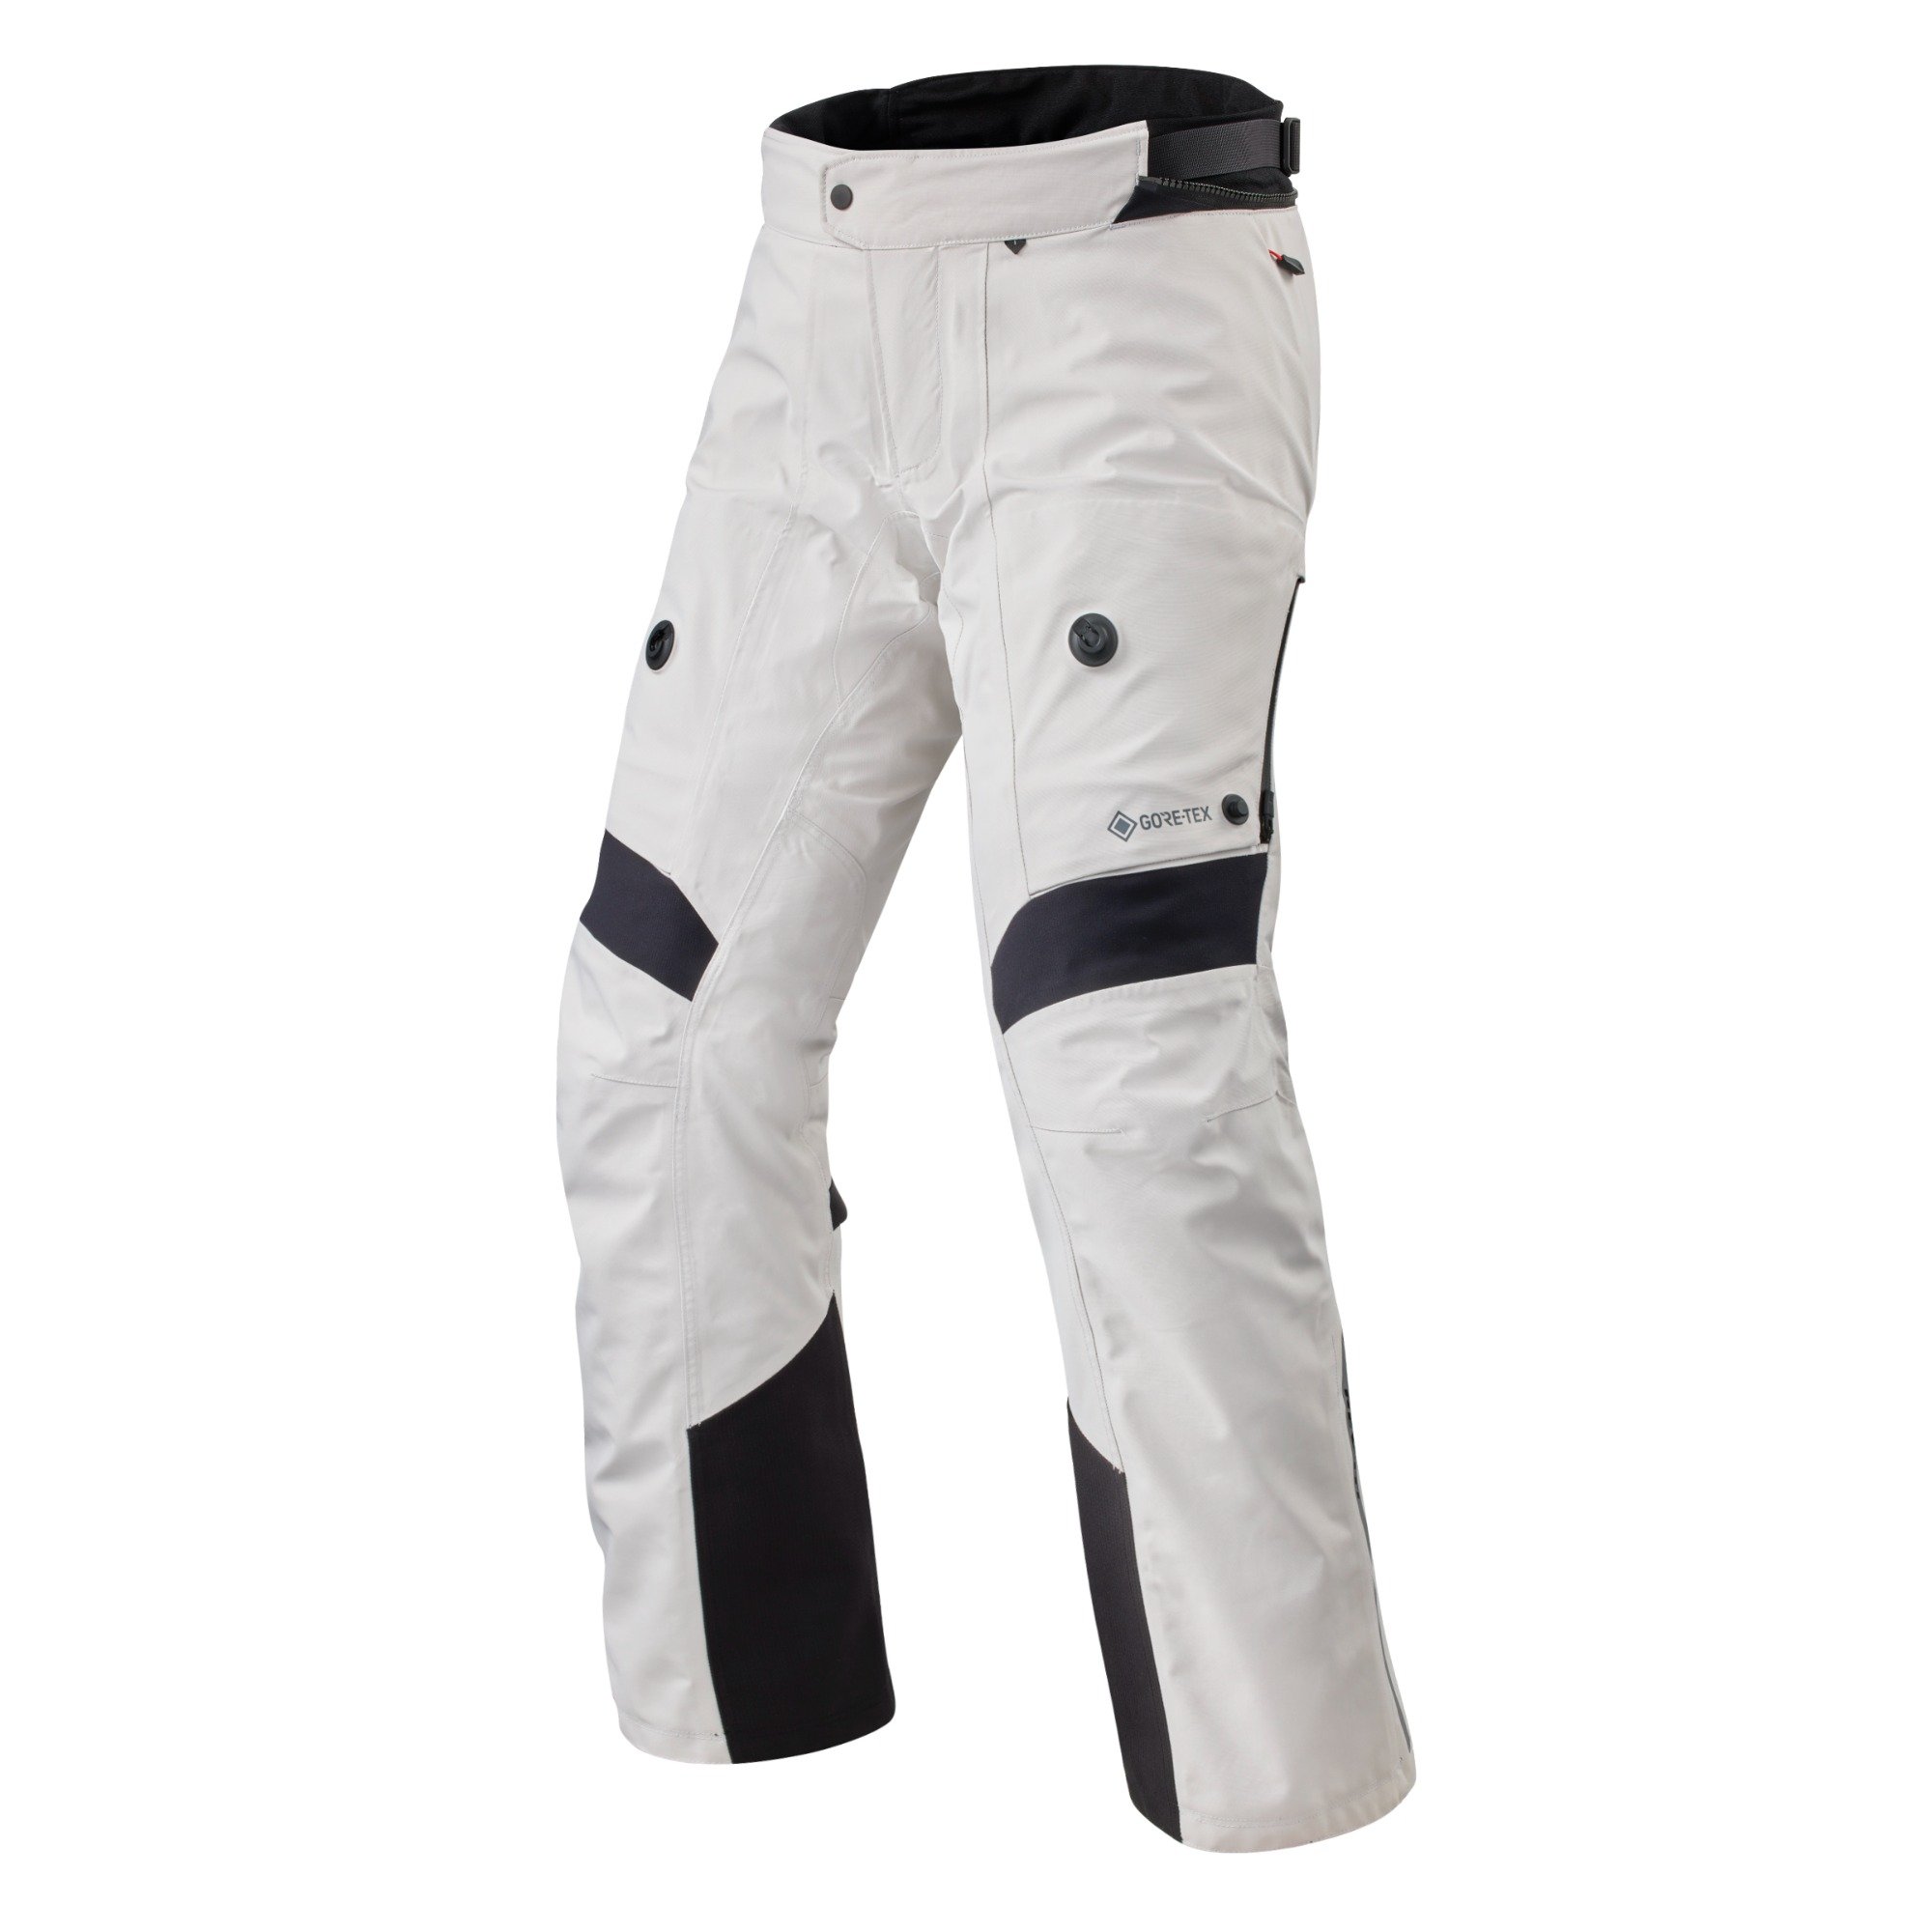 Image of REV'IT! Pants Poseidon 3 GTX Silver Black Long Motorcycle Pants Talla M